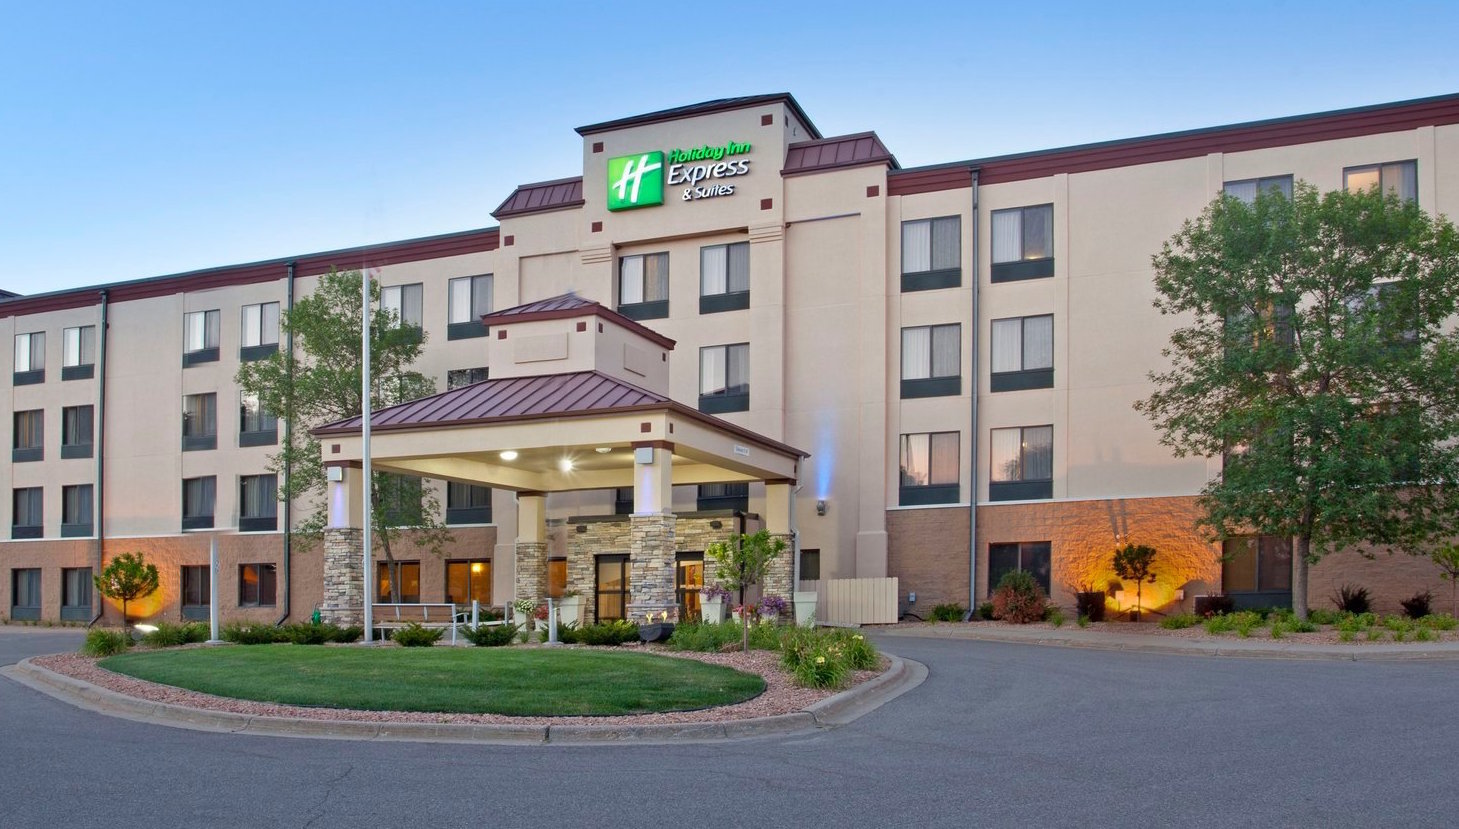 Photo of Holiday Inn Express & Suites Eden Prairie - Minnetonka, Minnetonka, MN